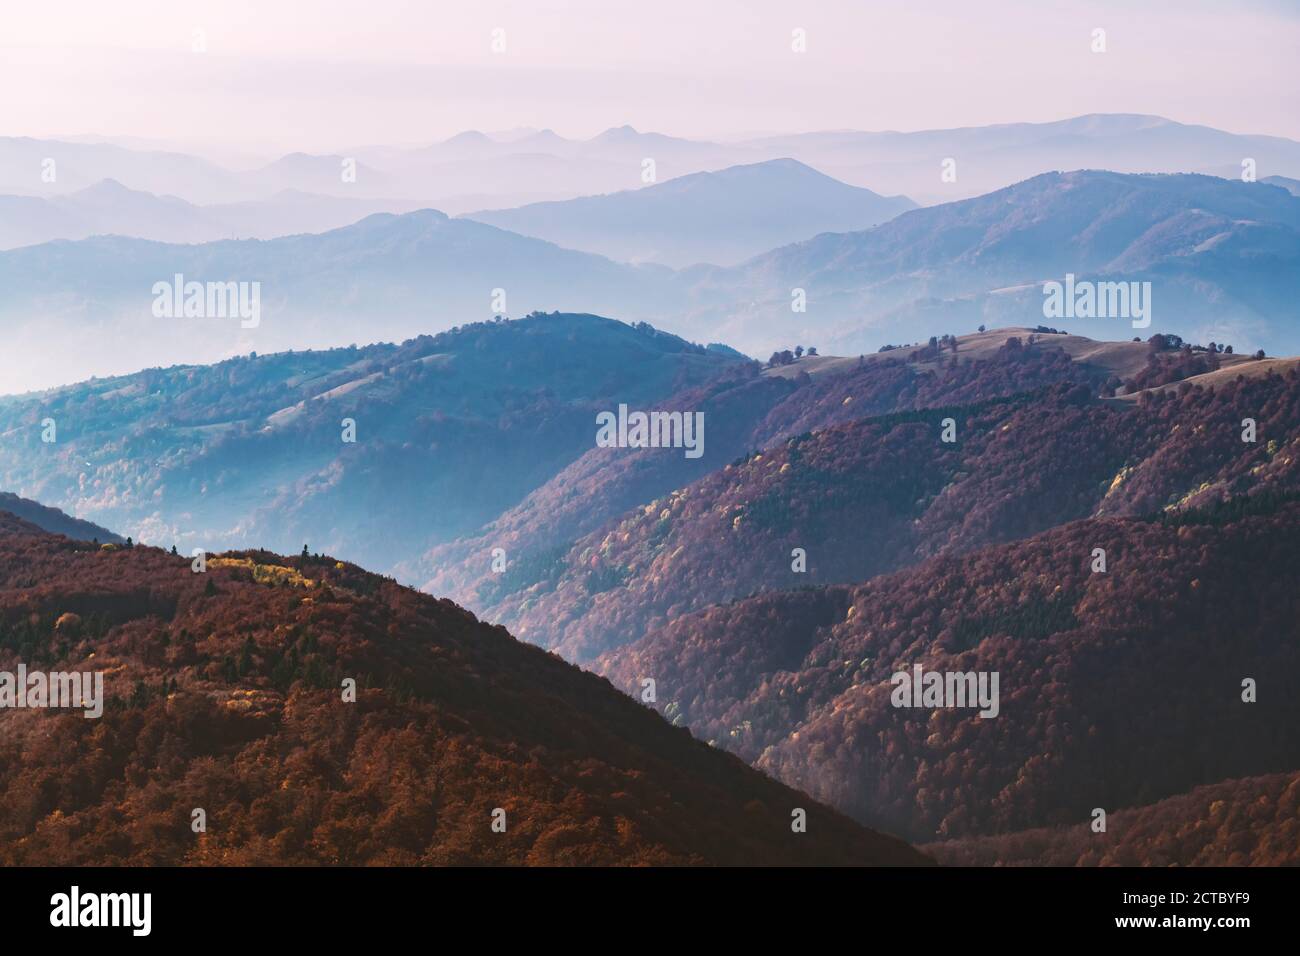 Autumn mountains at sunrise. Carpathian mountains, Ukraine. Landscape photography Stock Photo